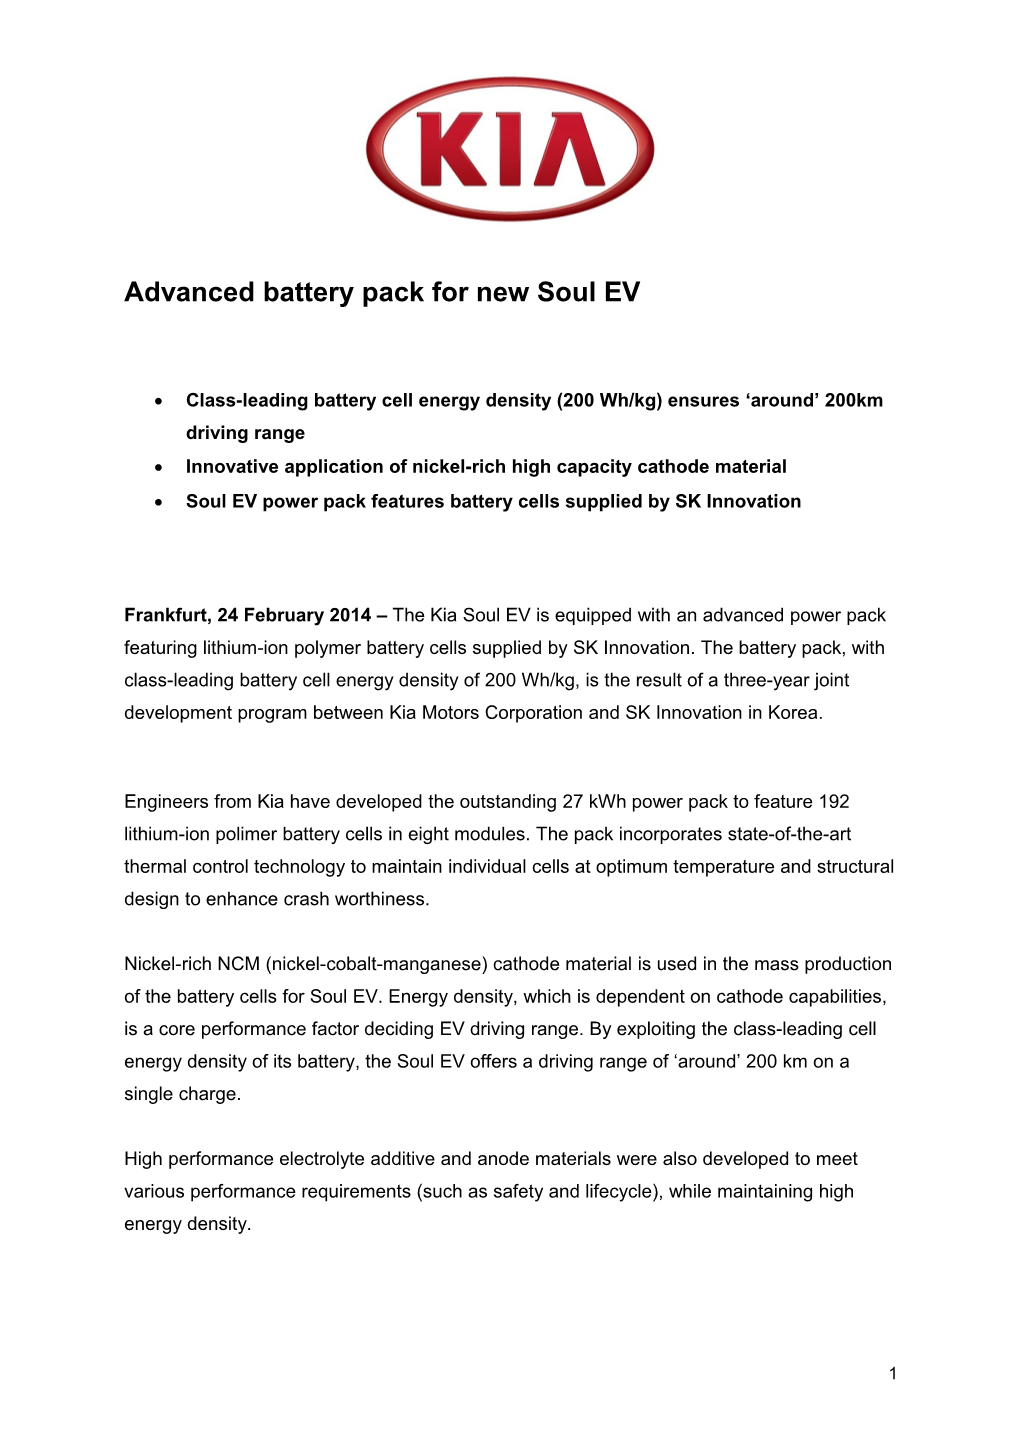 Advanced Battery Pack for New Soul EV